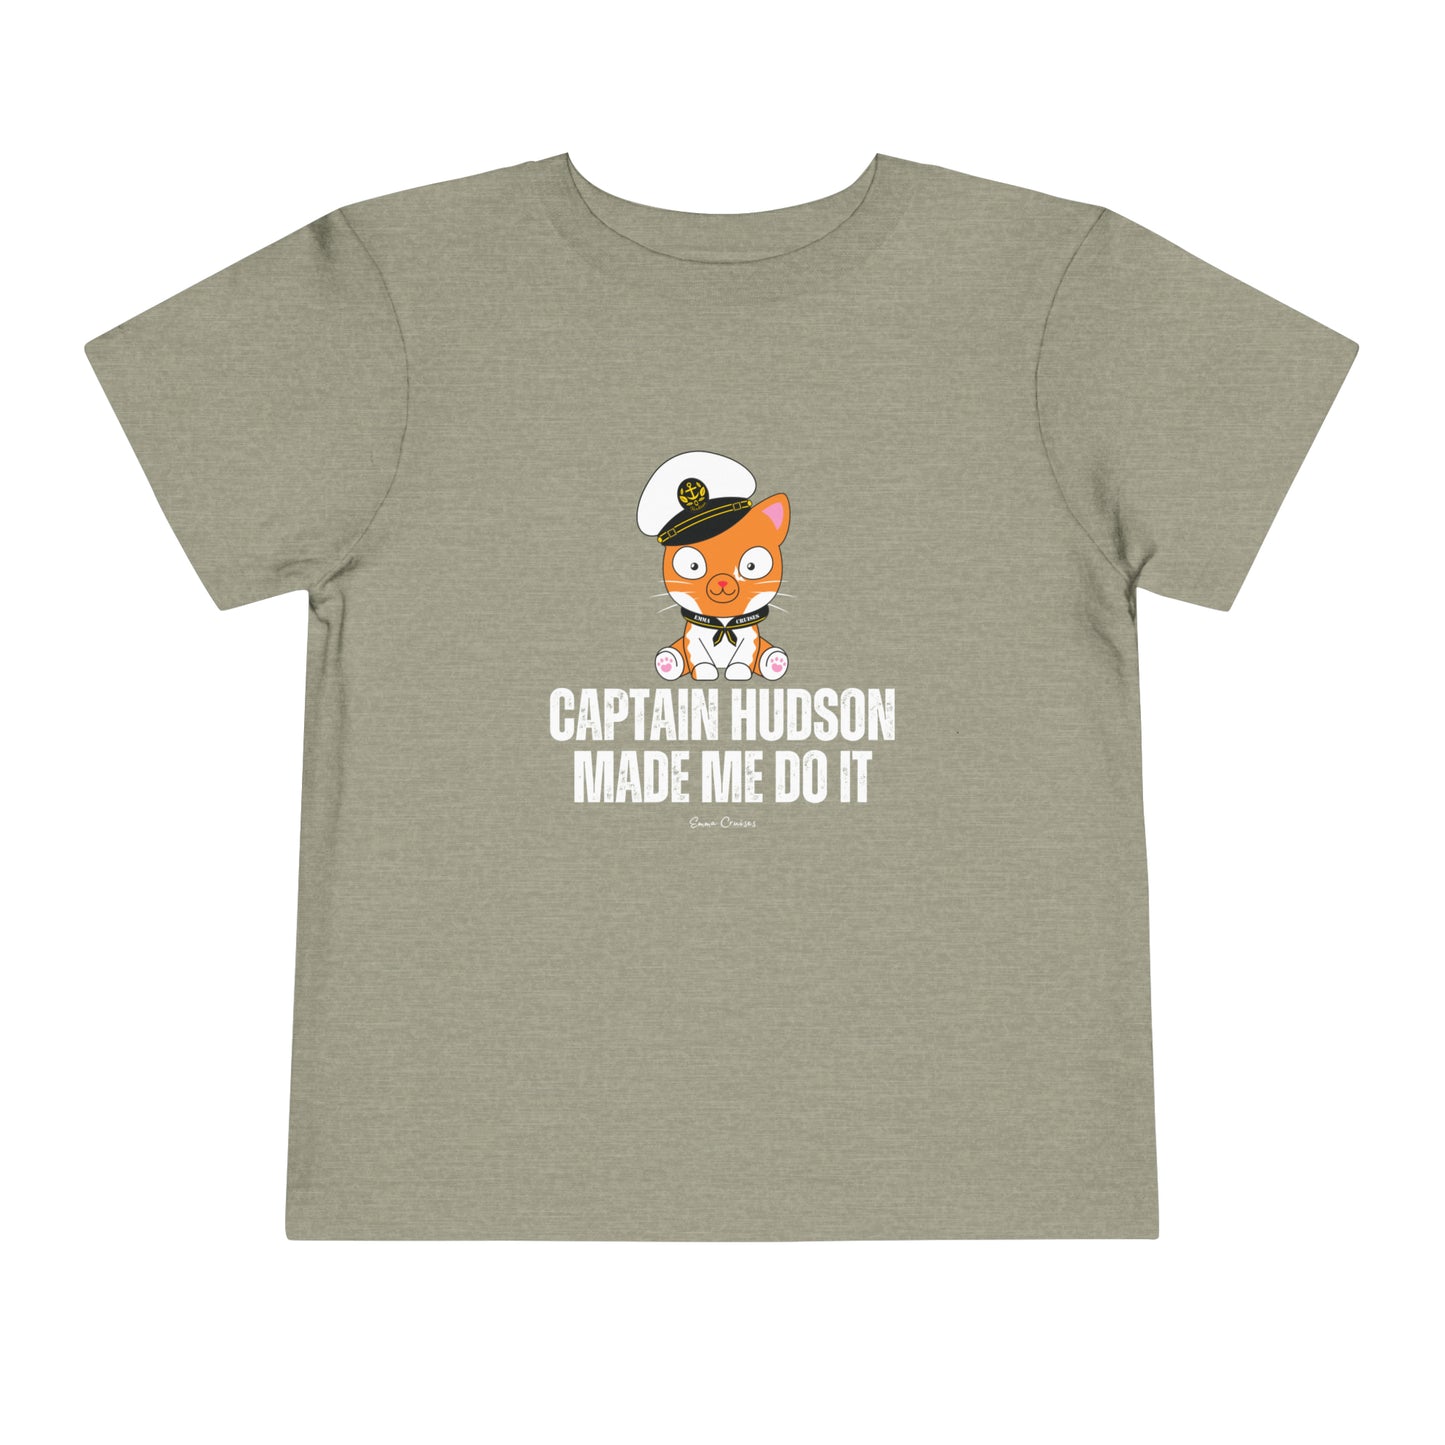 Capitán Hudson me hizo hacerlo - Camiseta UNISEX para niños pequeños 